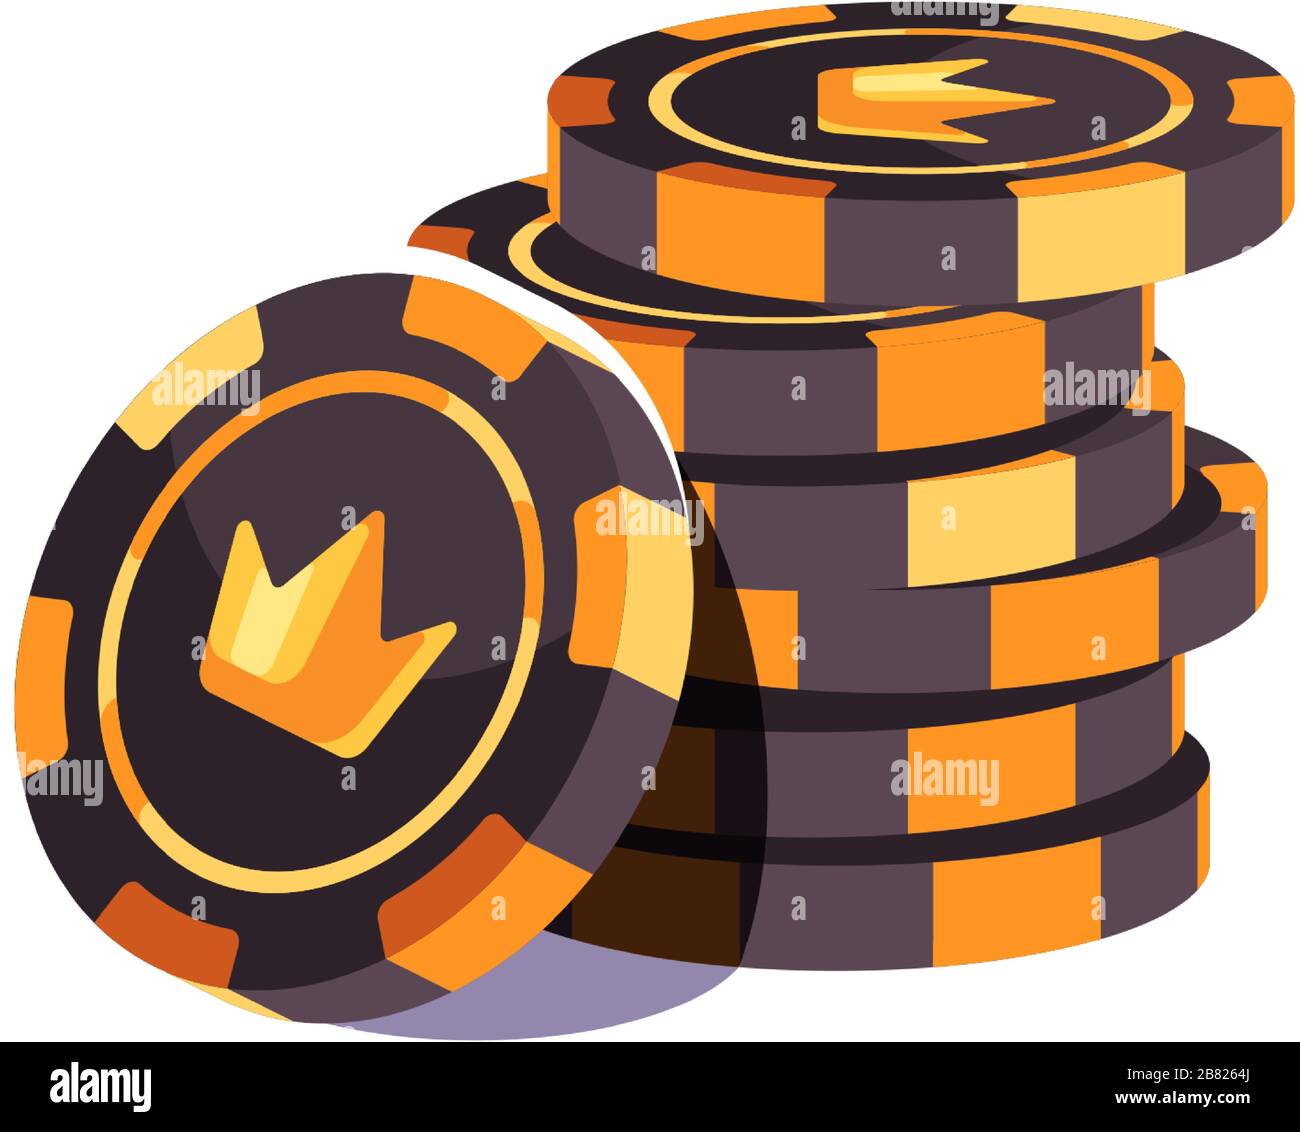 Black and gold poker chips stack. Casino illustration Stock Vector